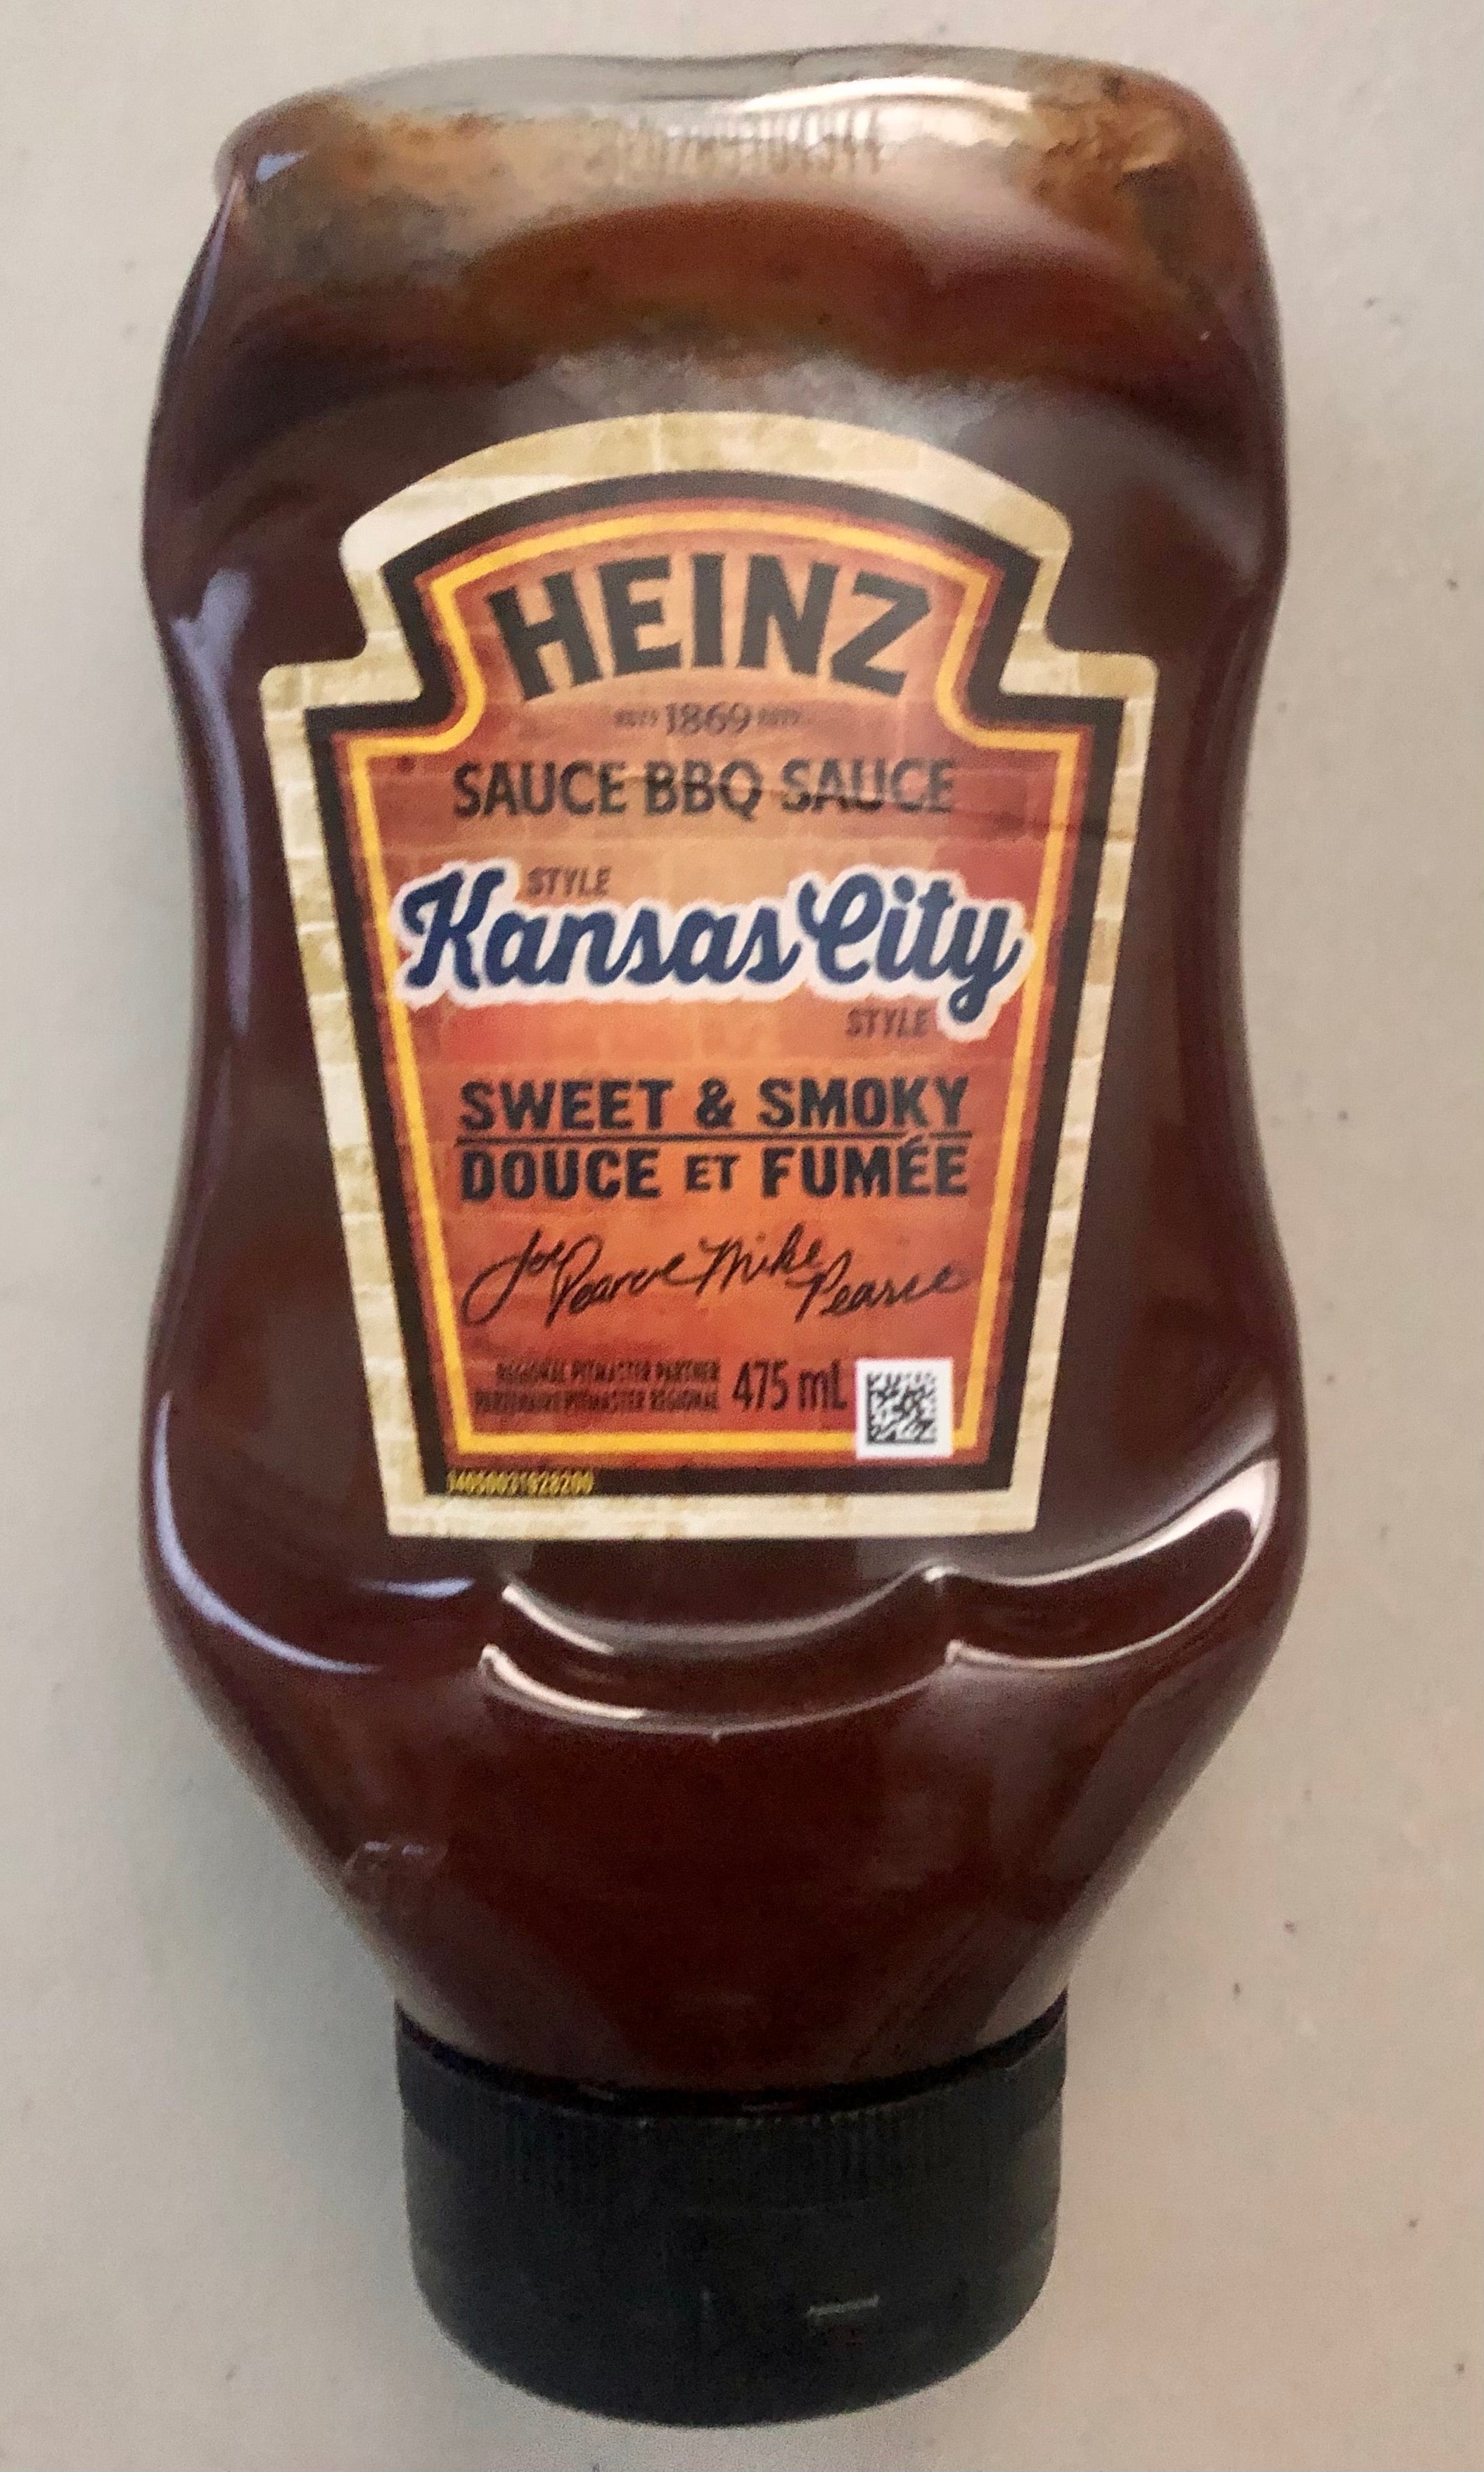 BBQ - SAUCE - Kansas City Style - 475 ml. - HEINZ